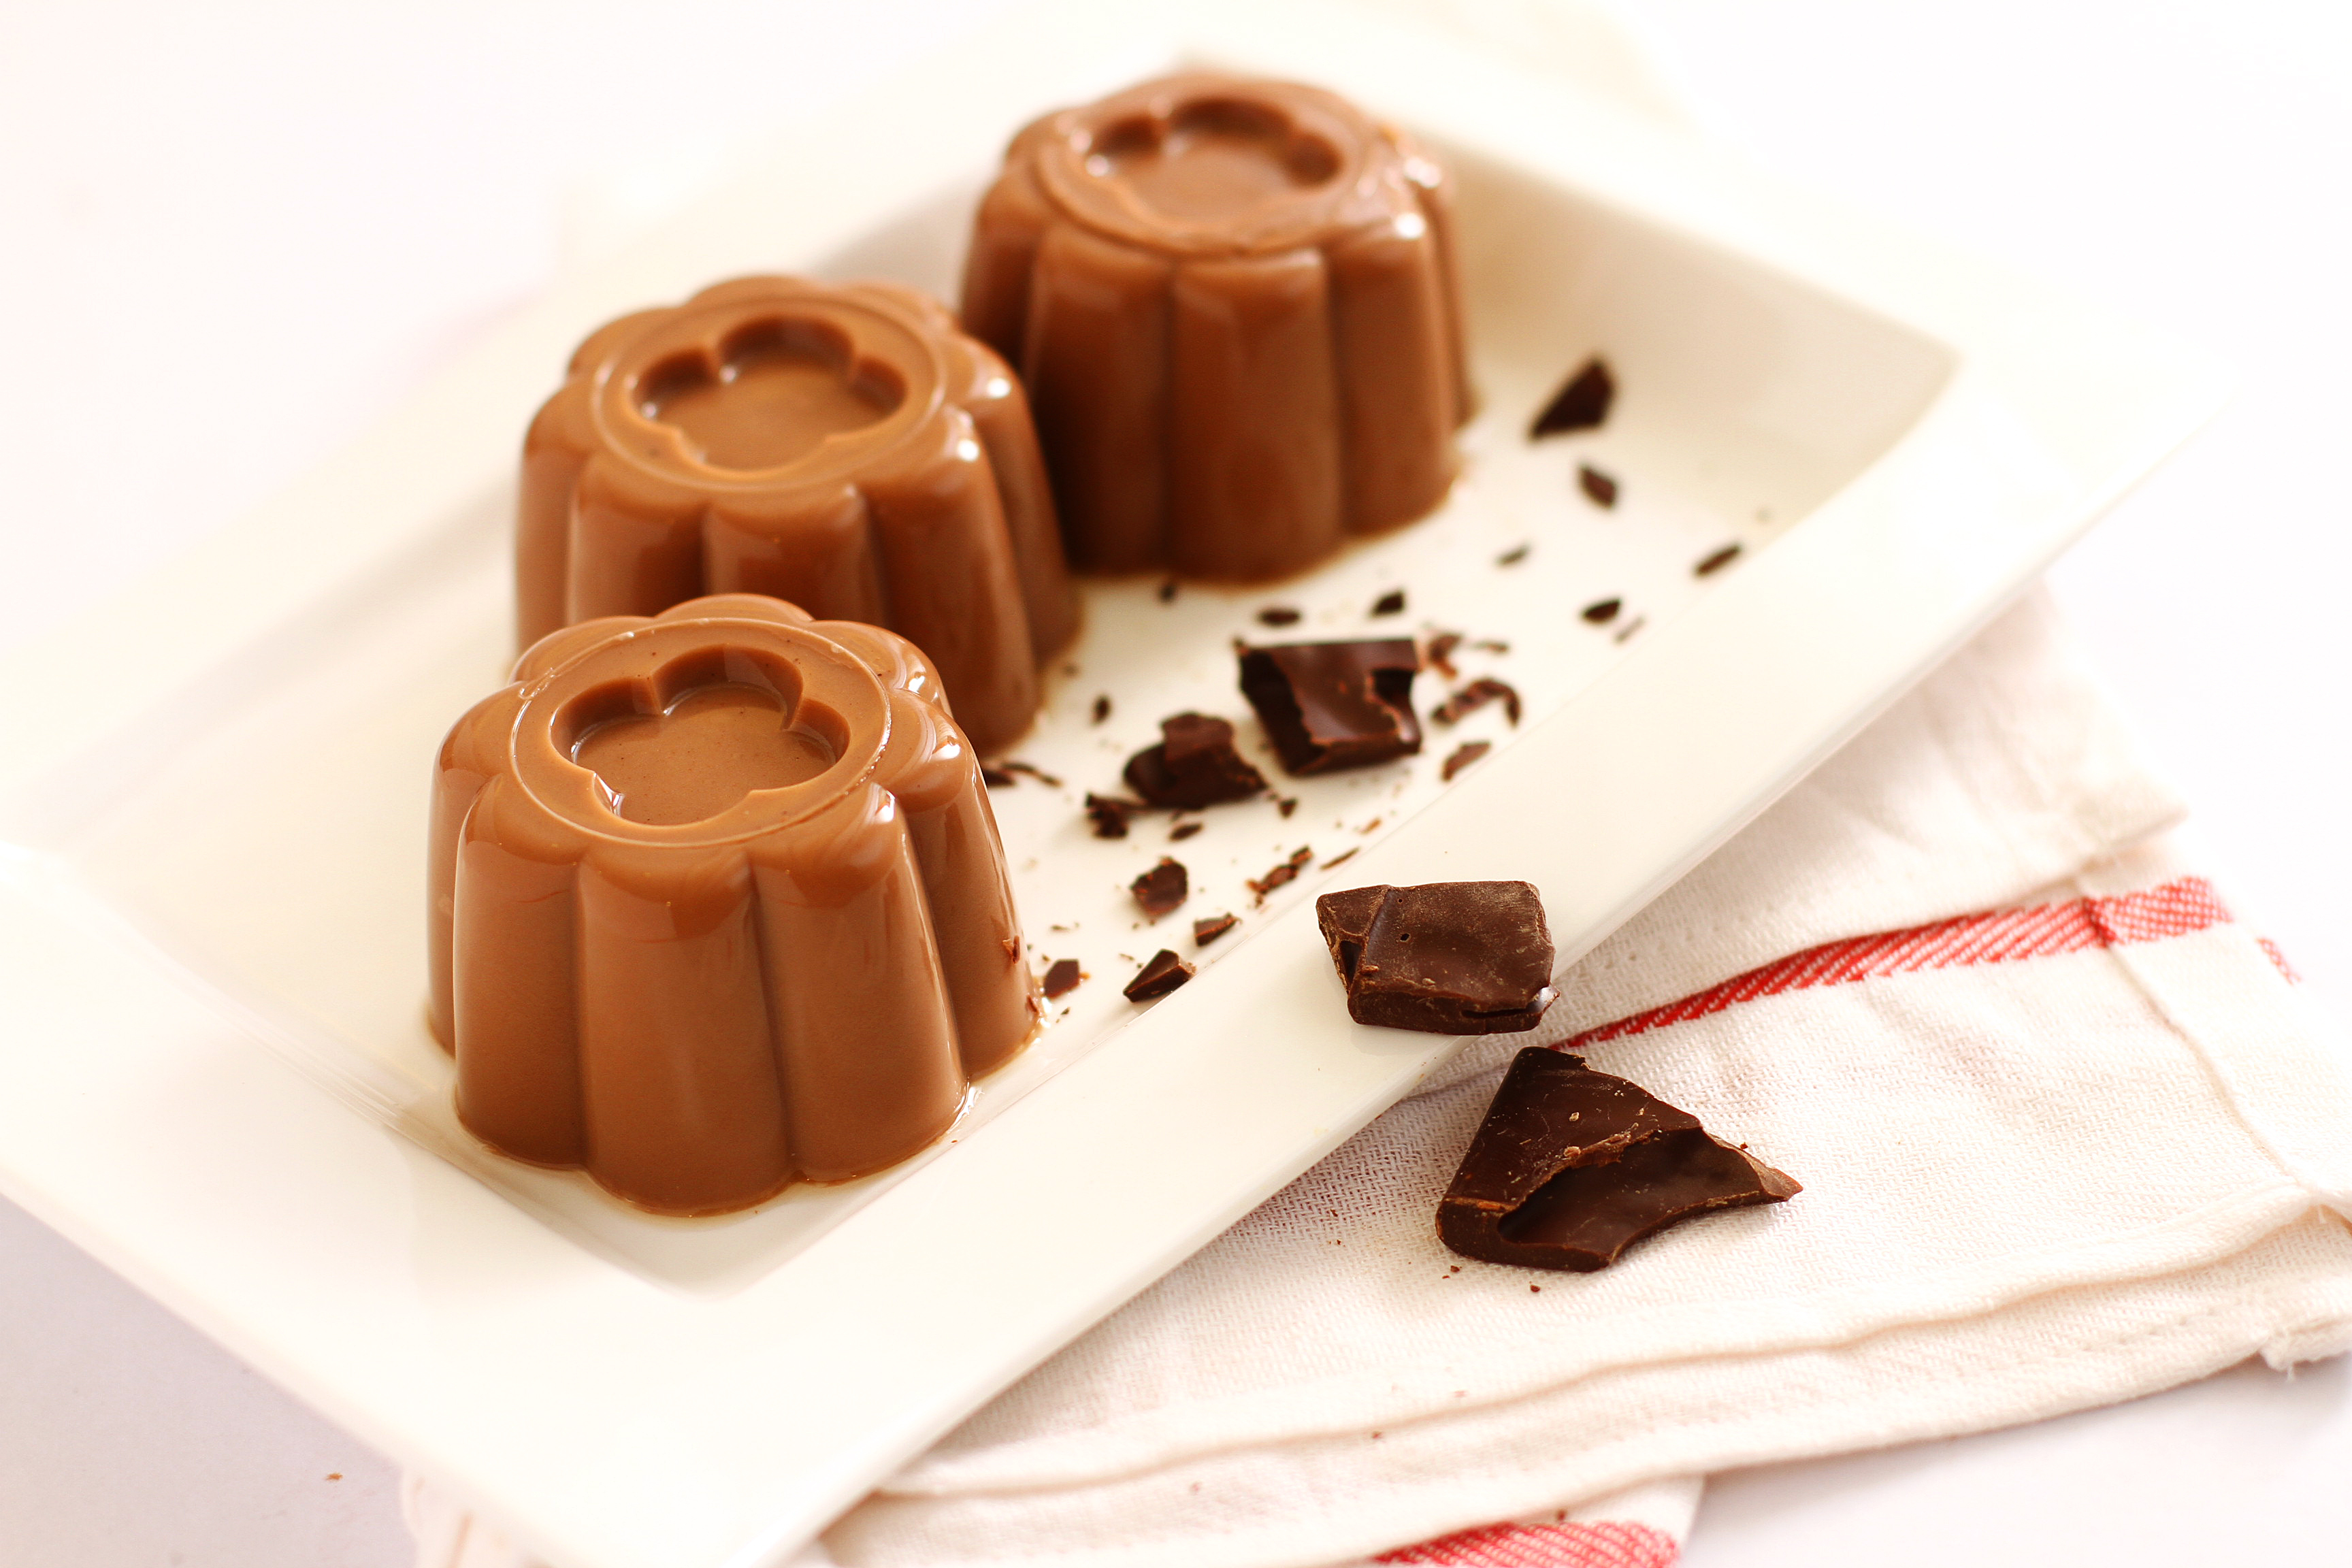 Chocolate Jelly